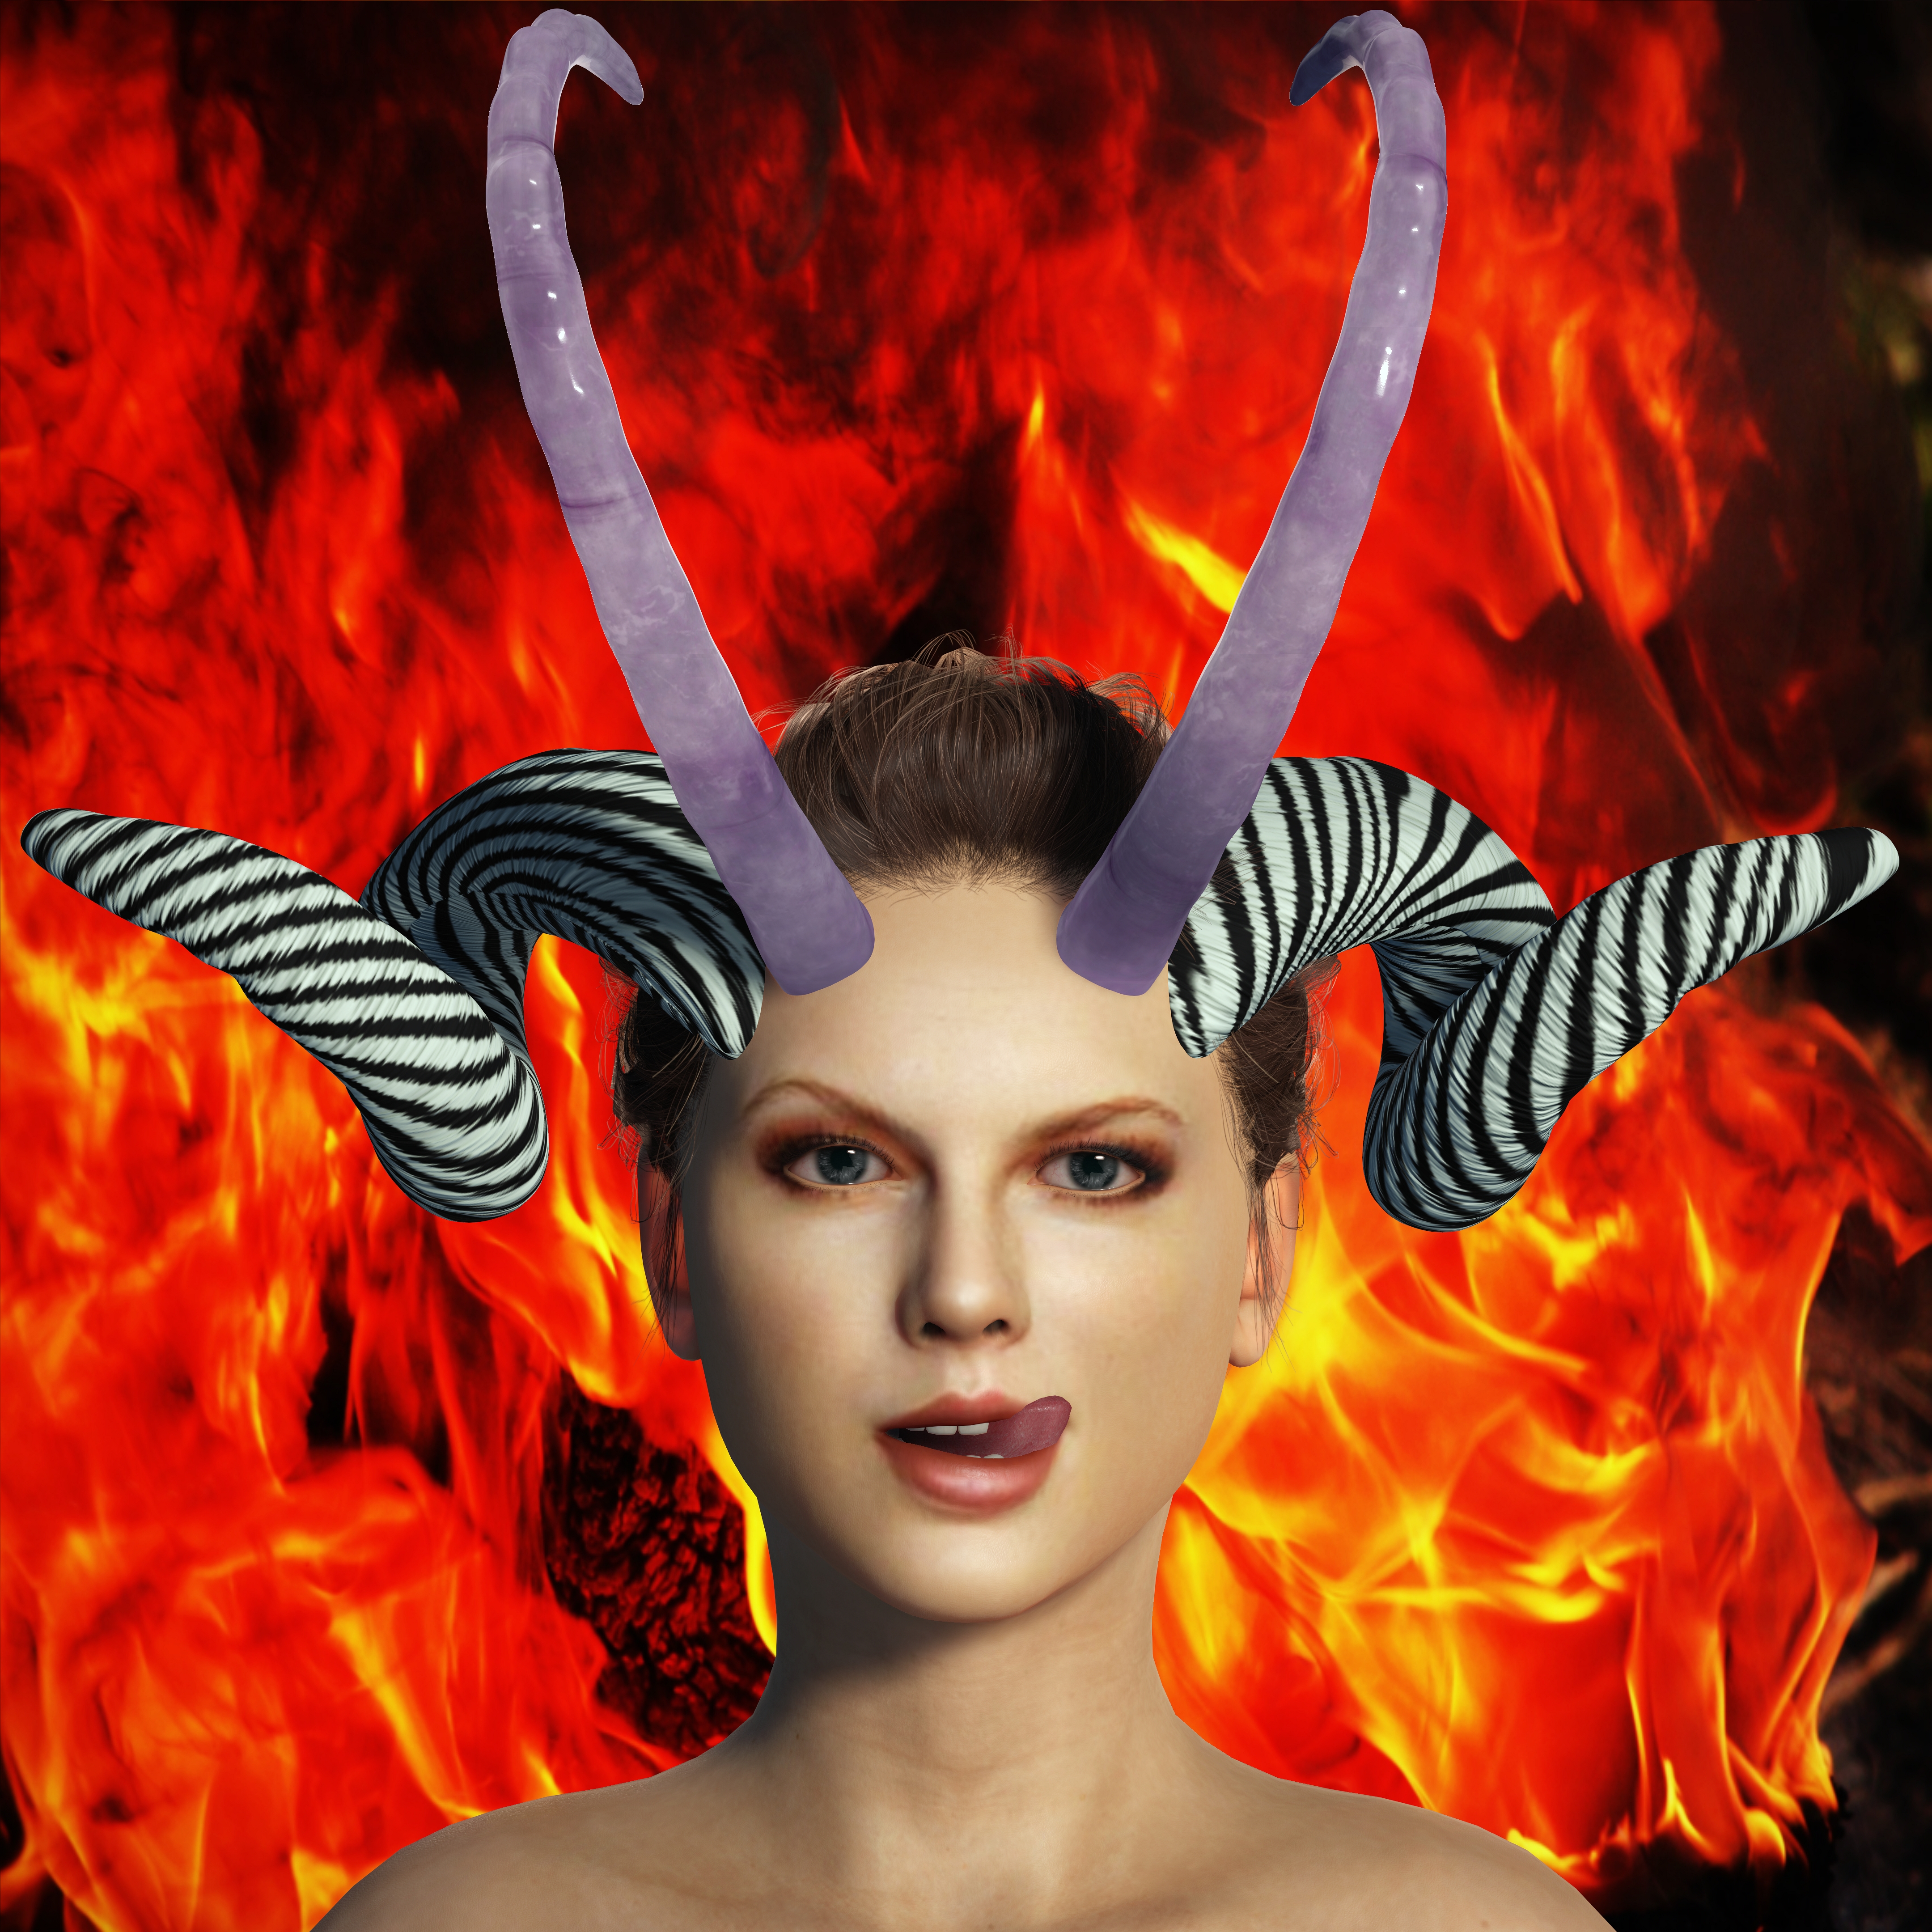 Taylor the Devil